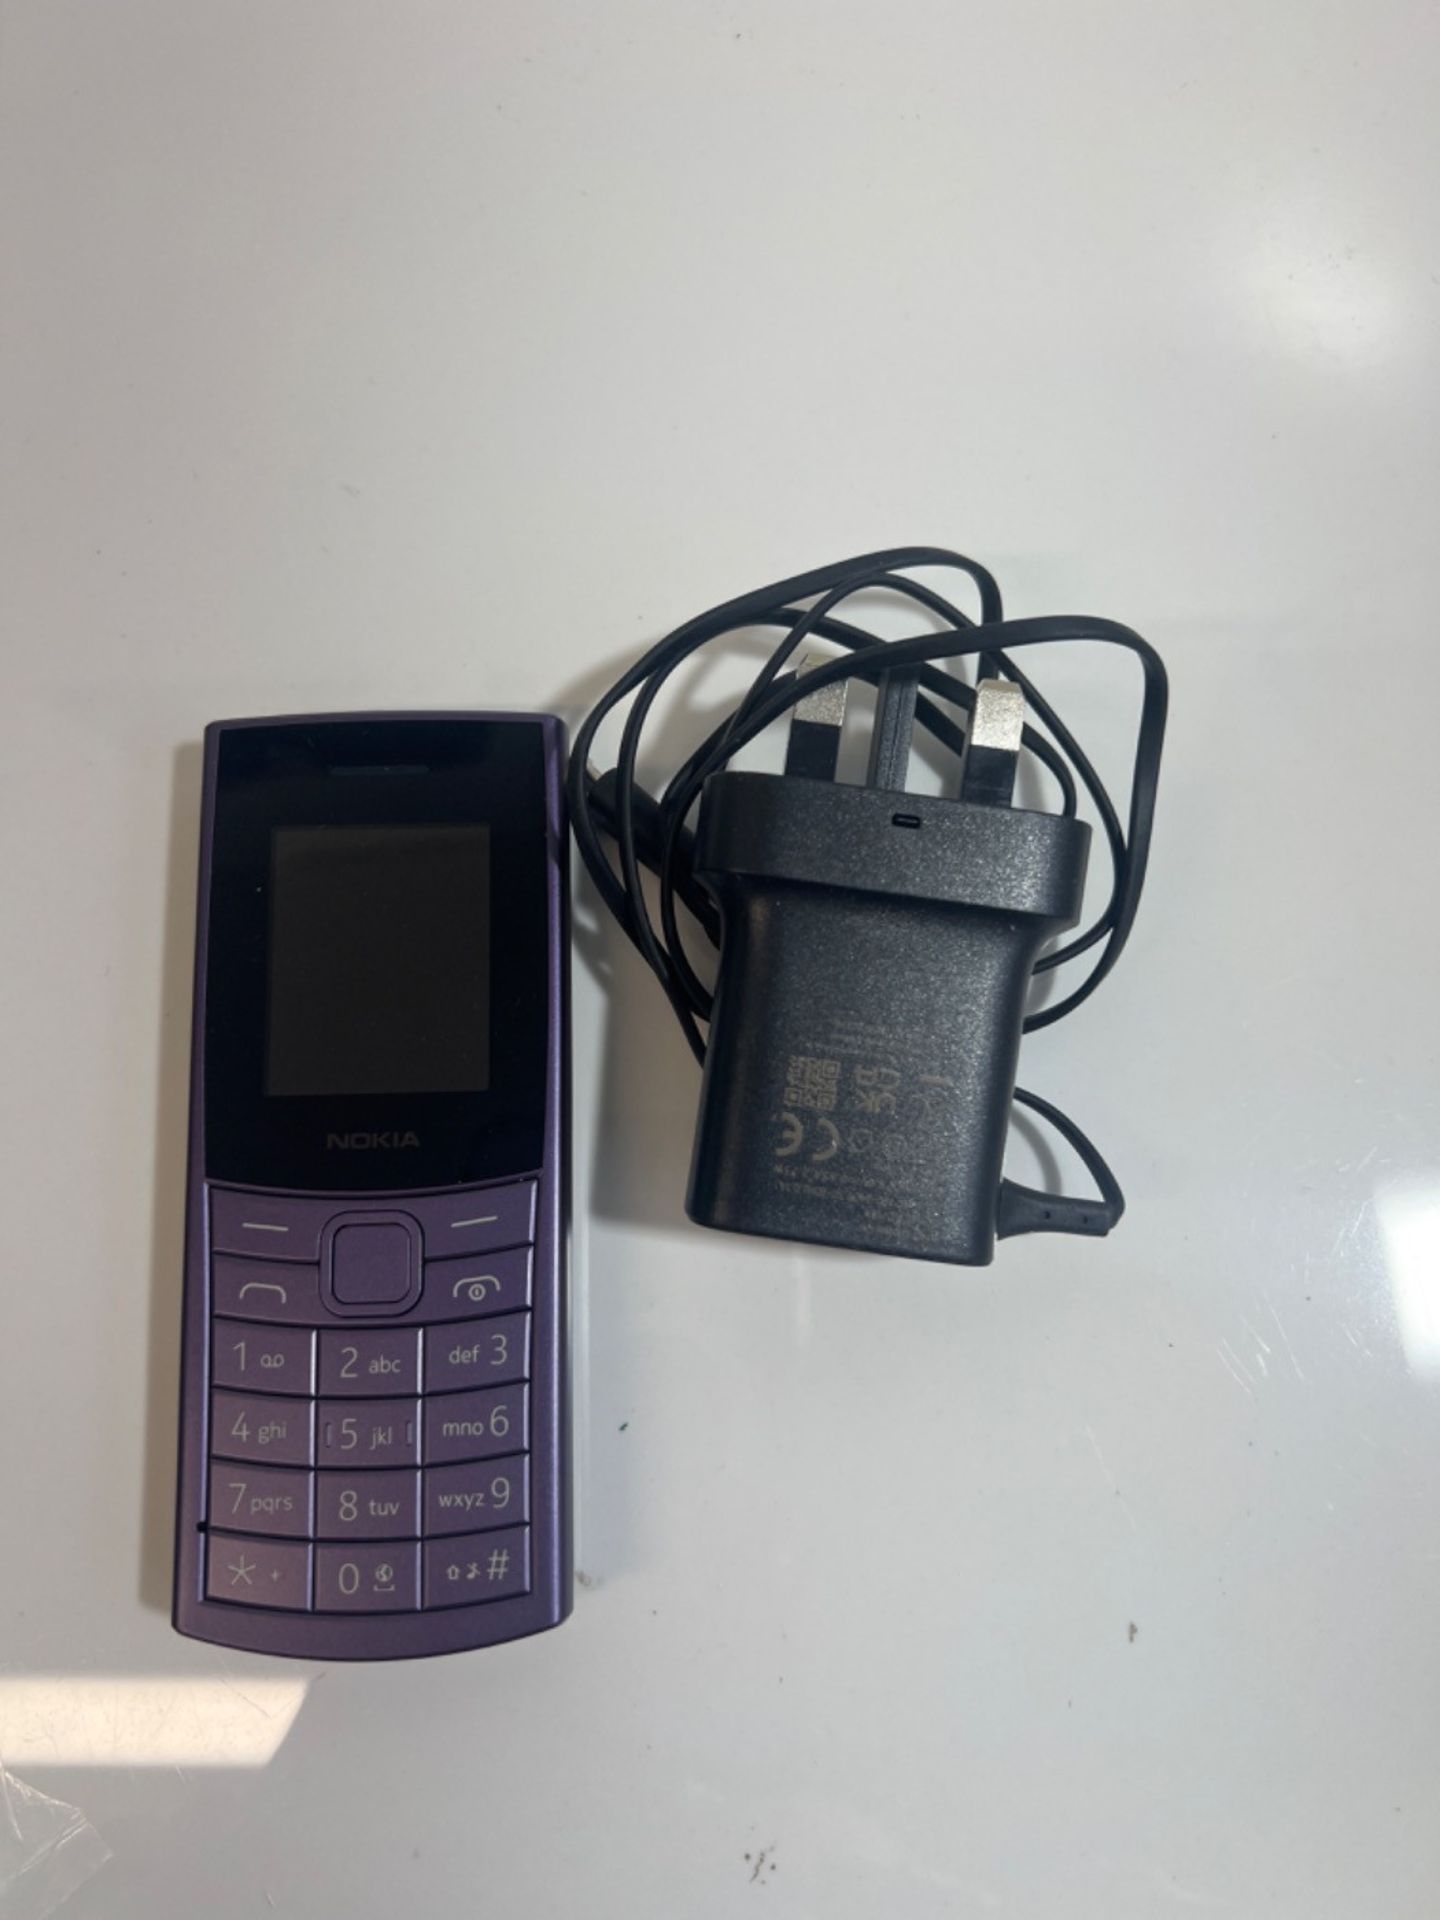 Nokia 110 4G Feature Phone With Camera, Bluetooth, FM radio, MP3 player, MicroSD, Long-Lasting Batt - Image 3 of 3